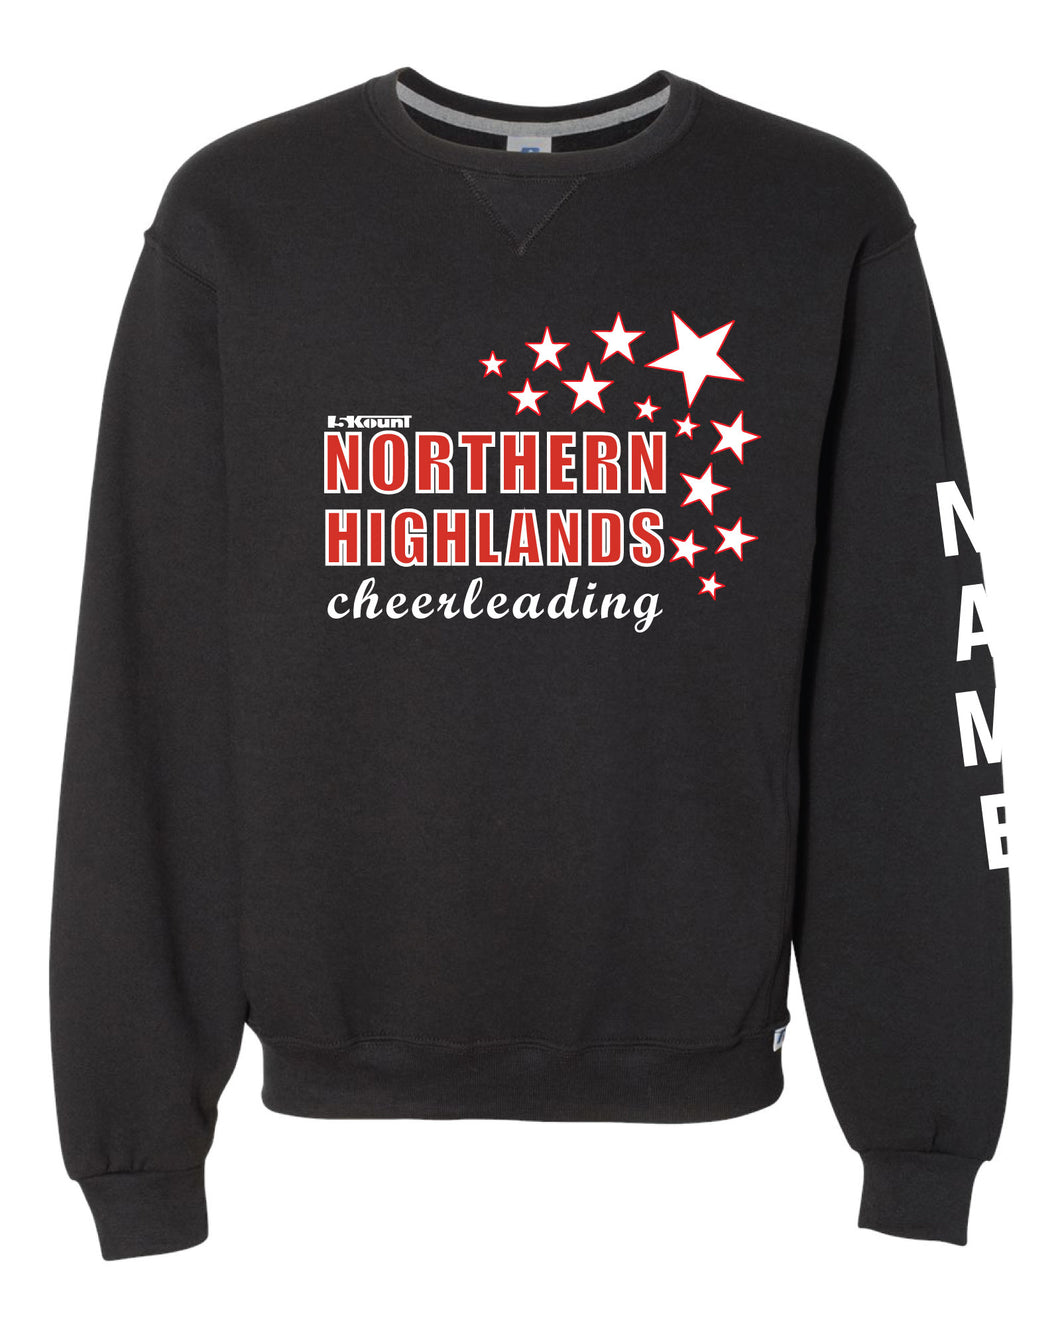 Highlands Cheer Russell Athletic Cotton Crewneck Sweatshirt Design 2 - Black - 5KounT2018